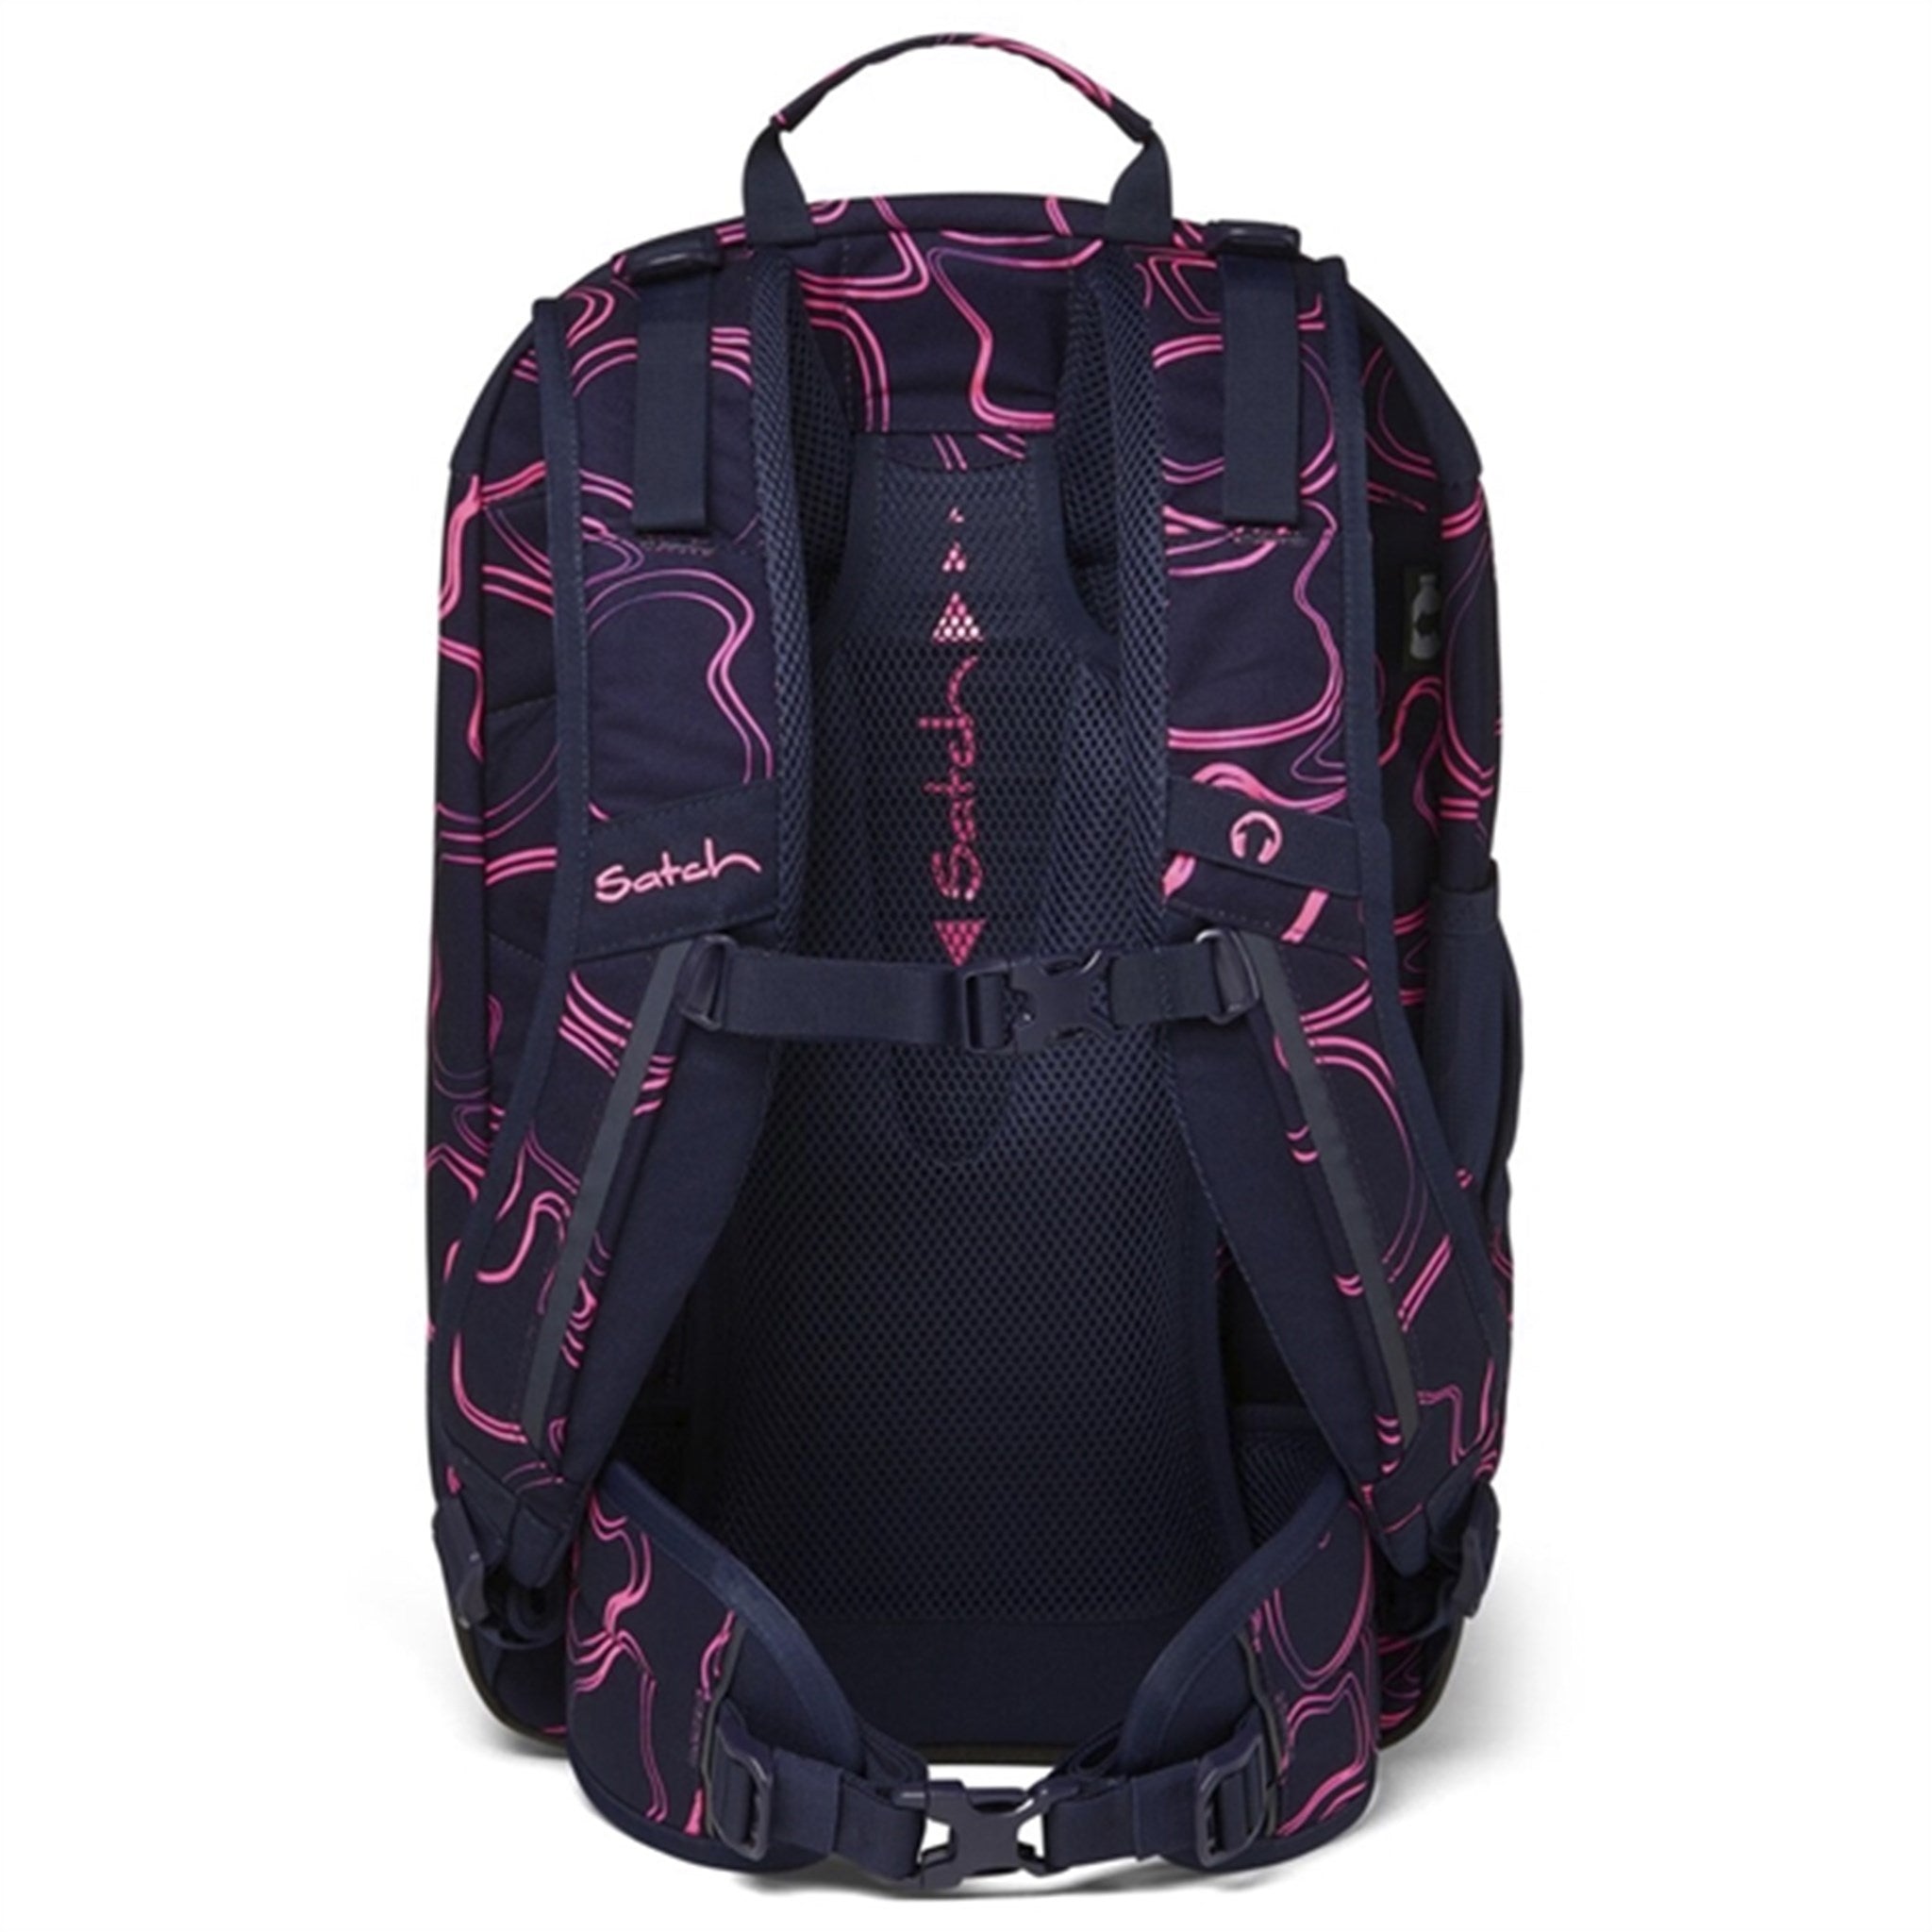 Satch Air School Bag Pink Supreme 3